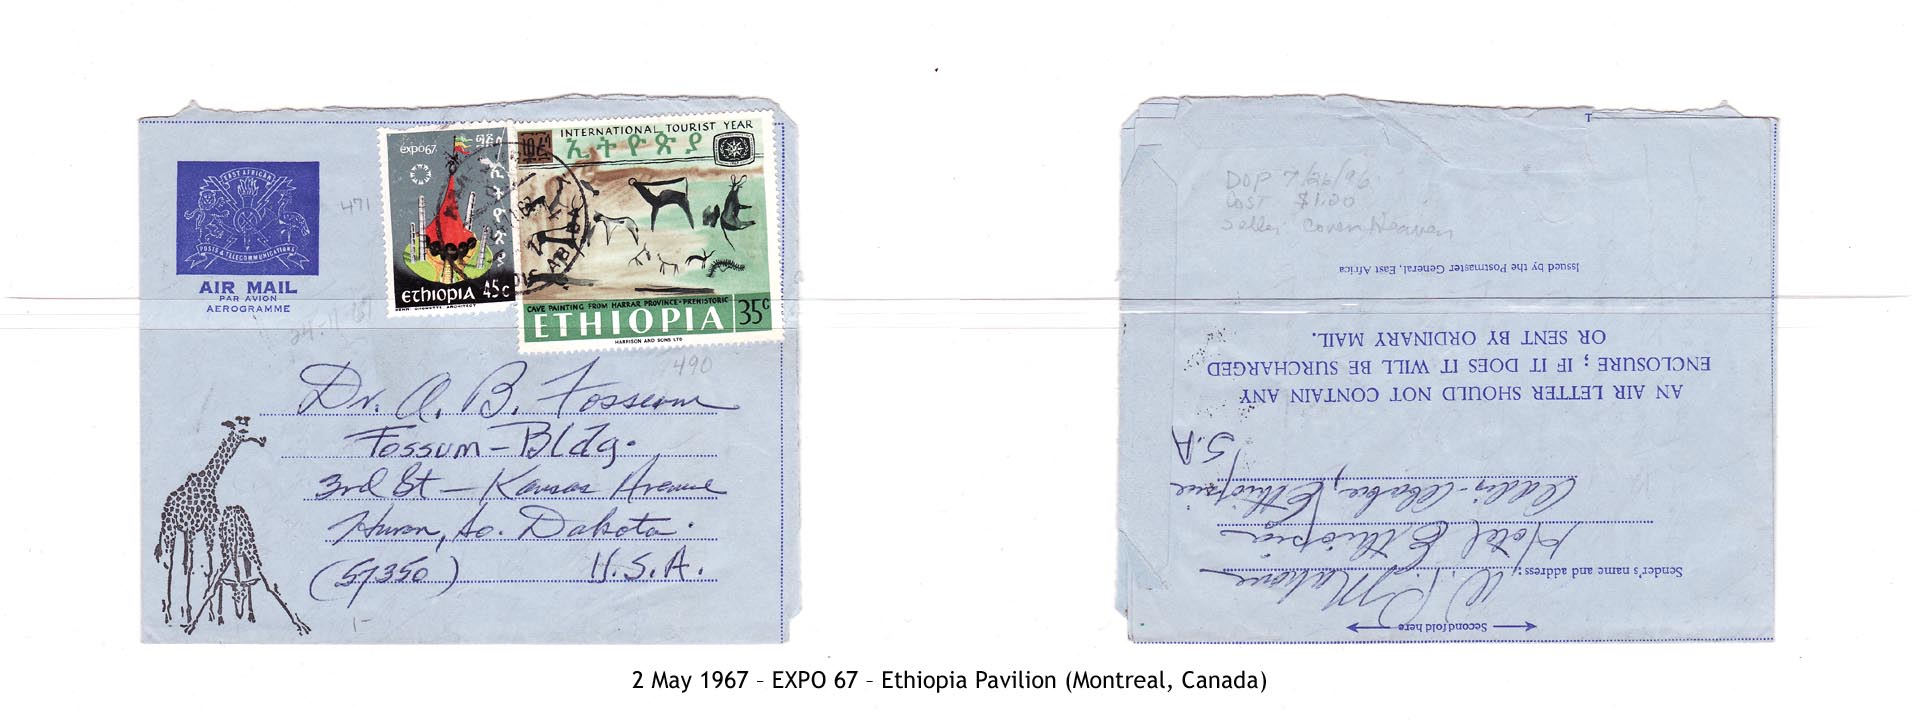 19670502 – EXPO 67 – Ethiopia Pavilion (Montreal, Canada)